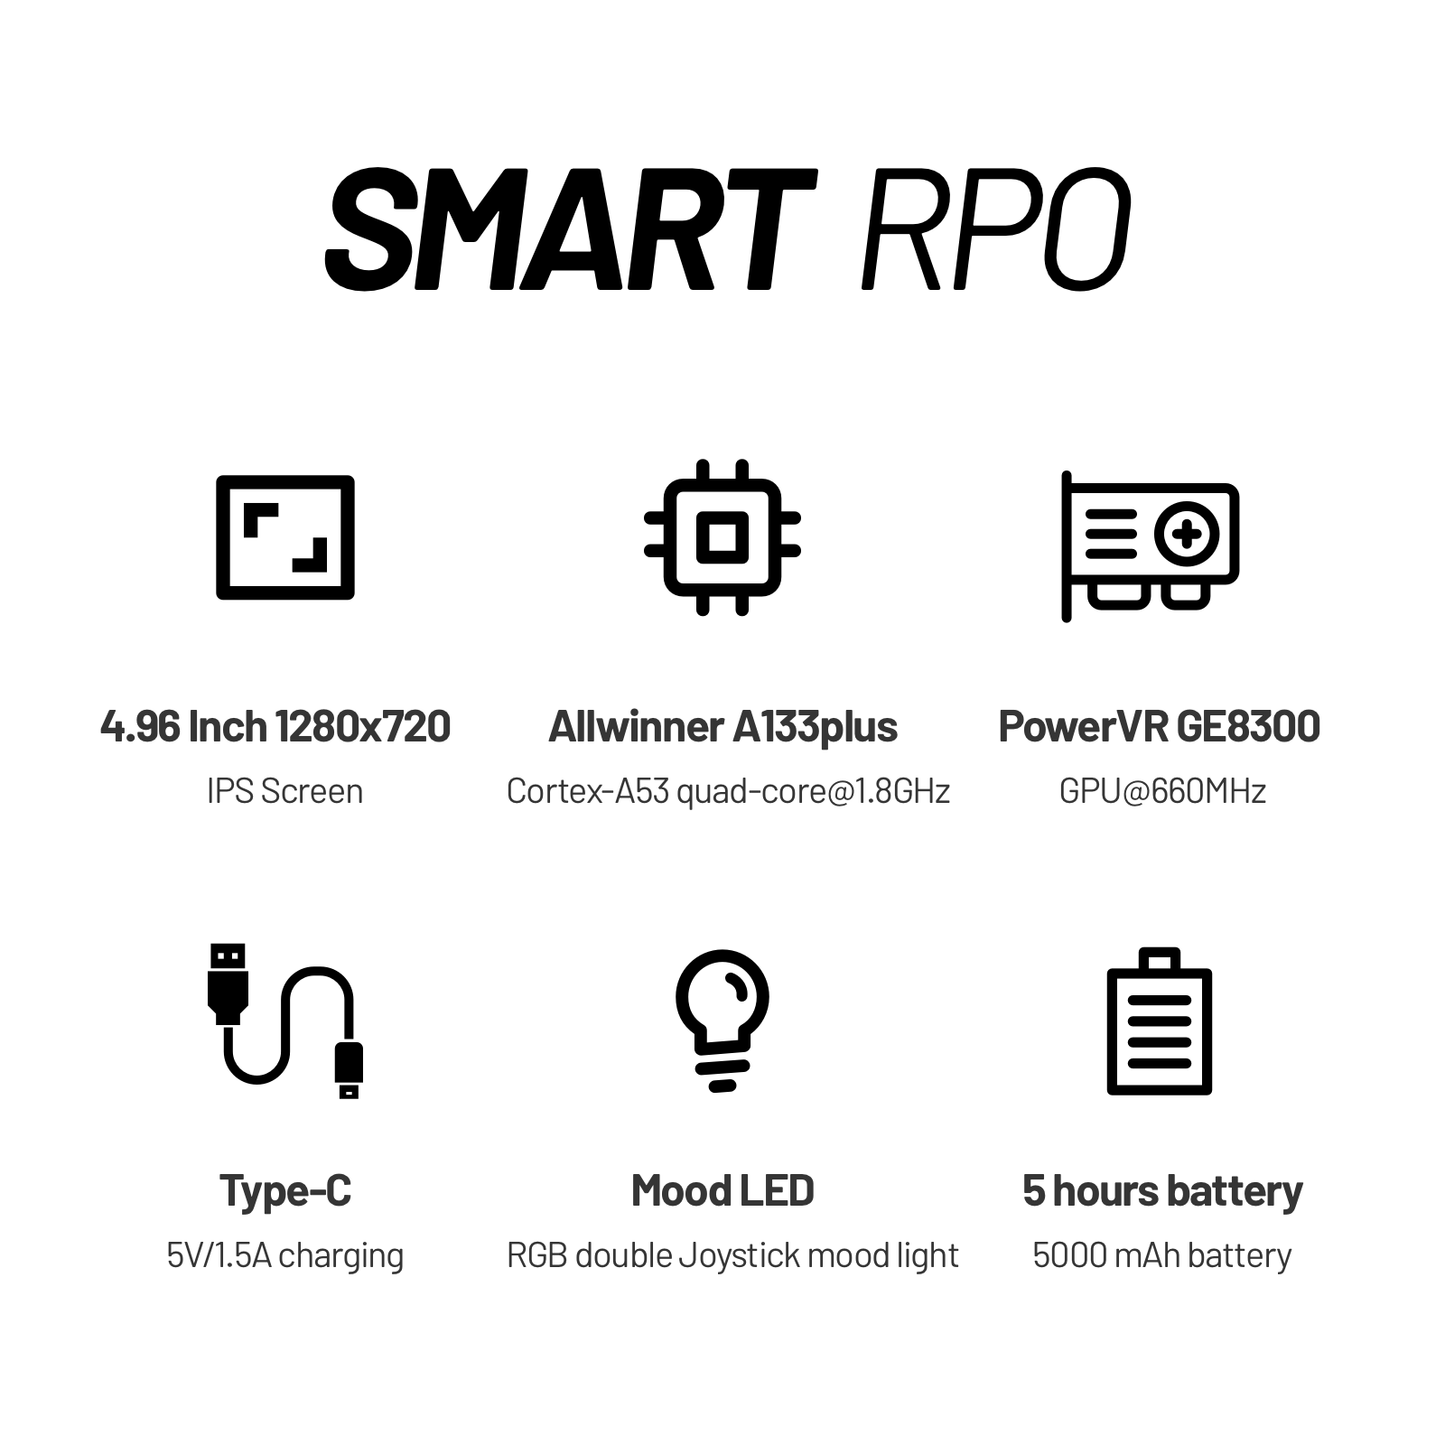 Trimui Smart Pro: 4.96" Retro Handheld Console with Linux OS, A133P Processor, Mini Fan